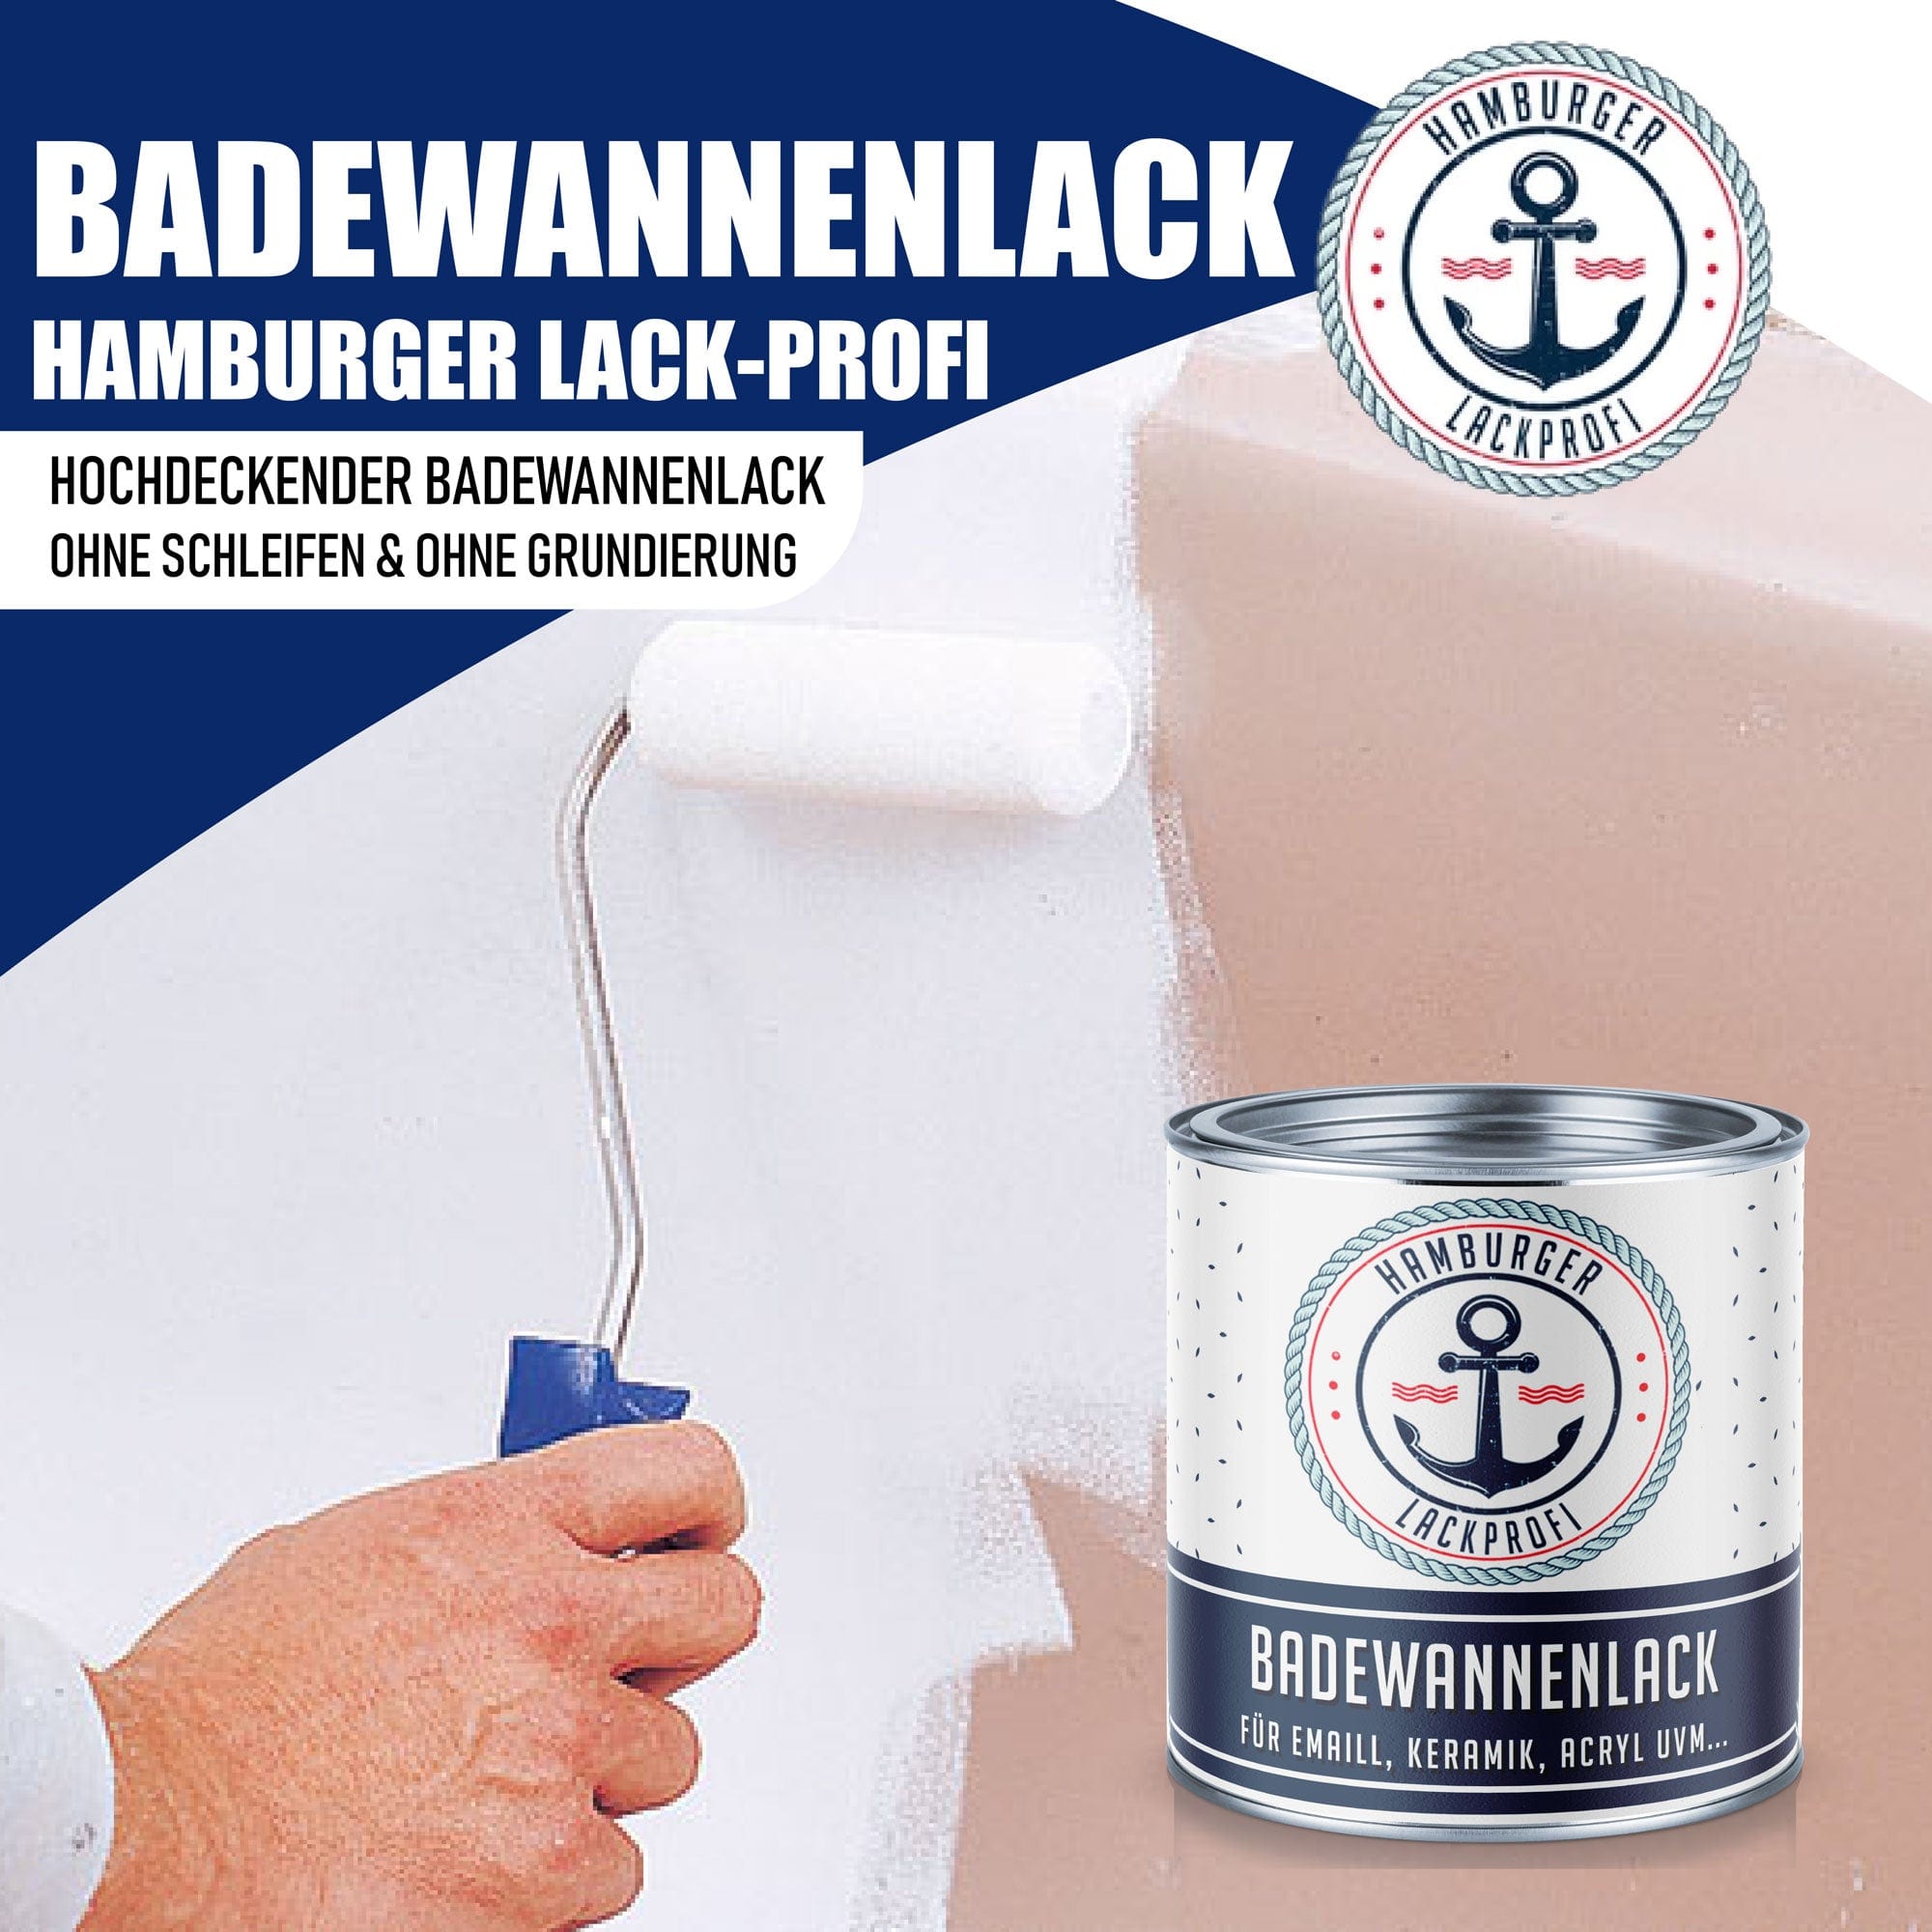 Hamburger Lack-Profi Badewannenlack Hamburger Lack-Profi 2K Badewannenlack Grauweiß RAL 9002 - Glänzend / Seidenmatt / Matt